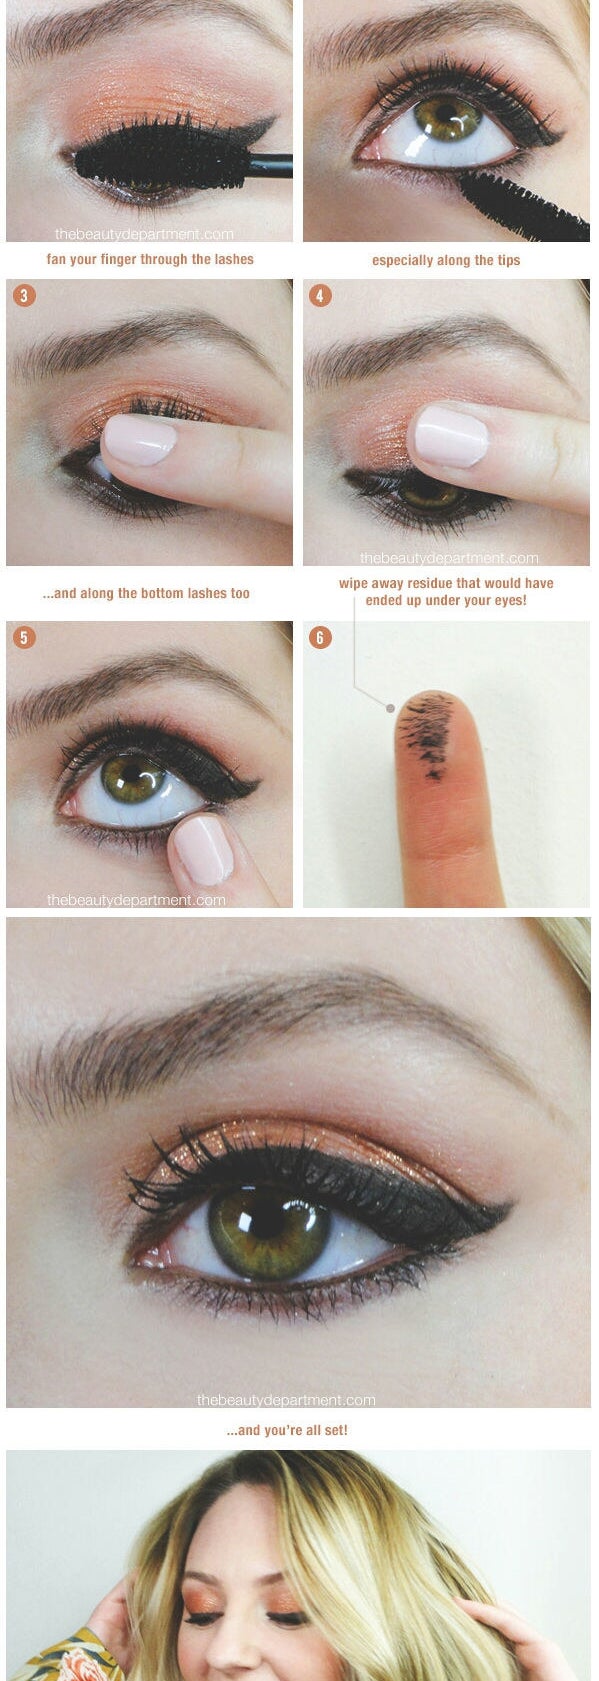 Make-up tricks that never fail